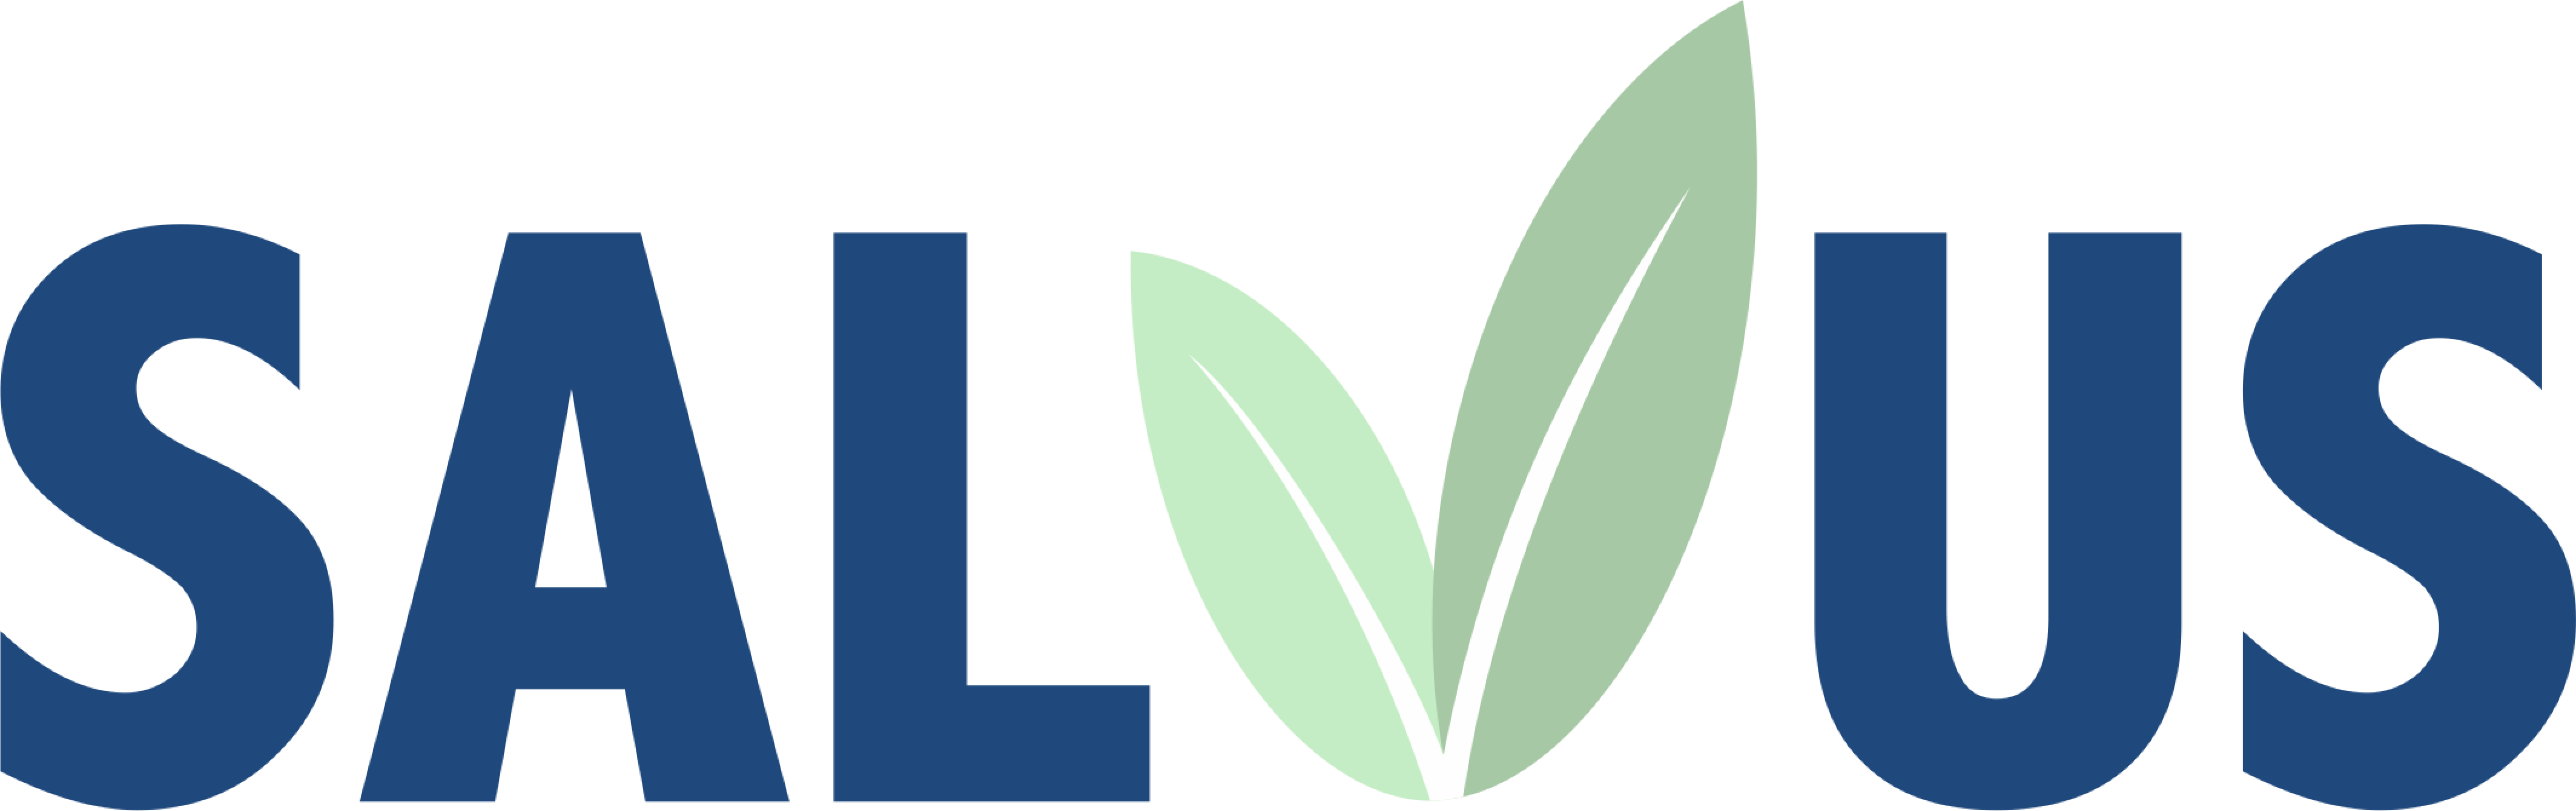 Salvus Health - Logo